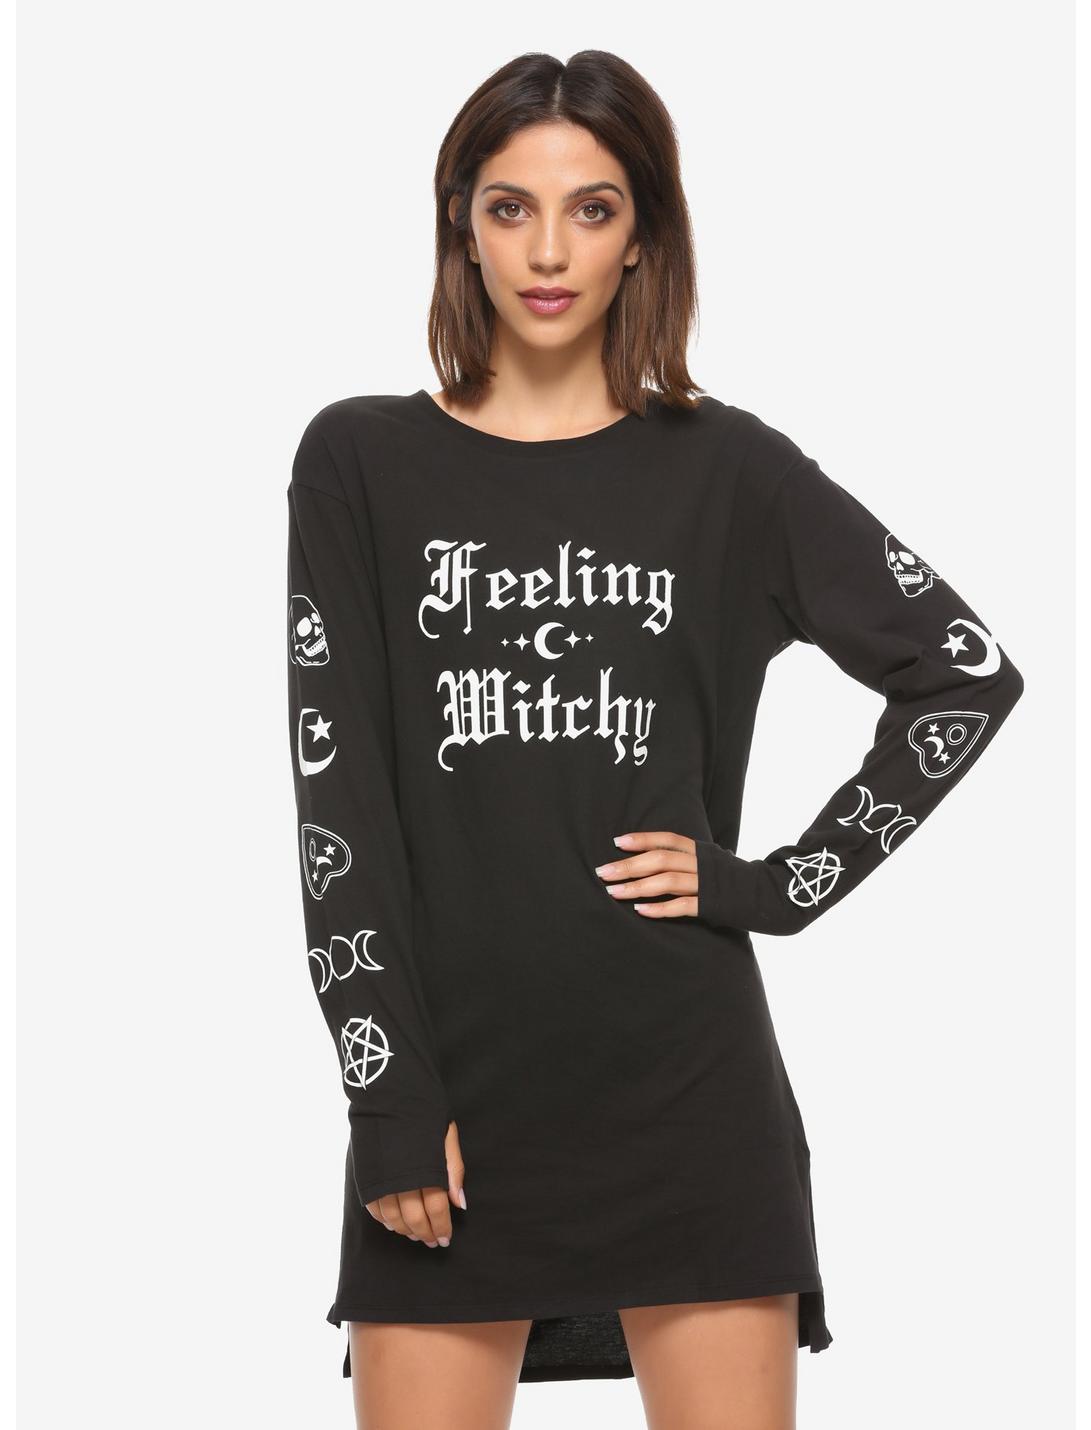 Feeling Witchy Long-Sleeve T-Shirt Dress, BLACK, hi-res